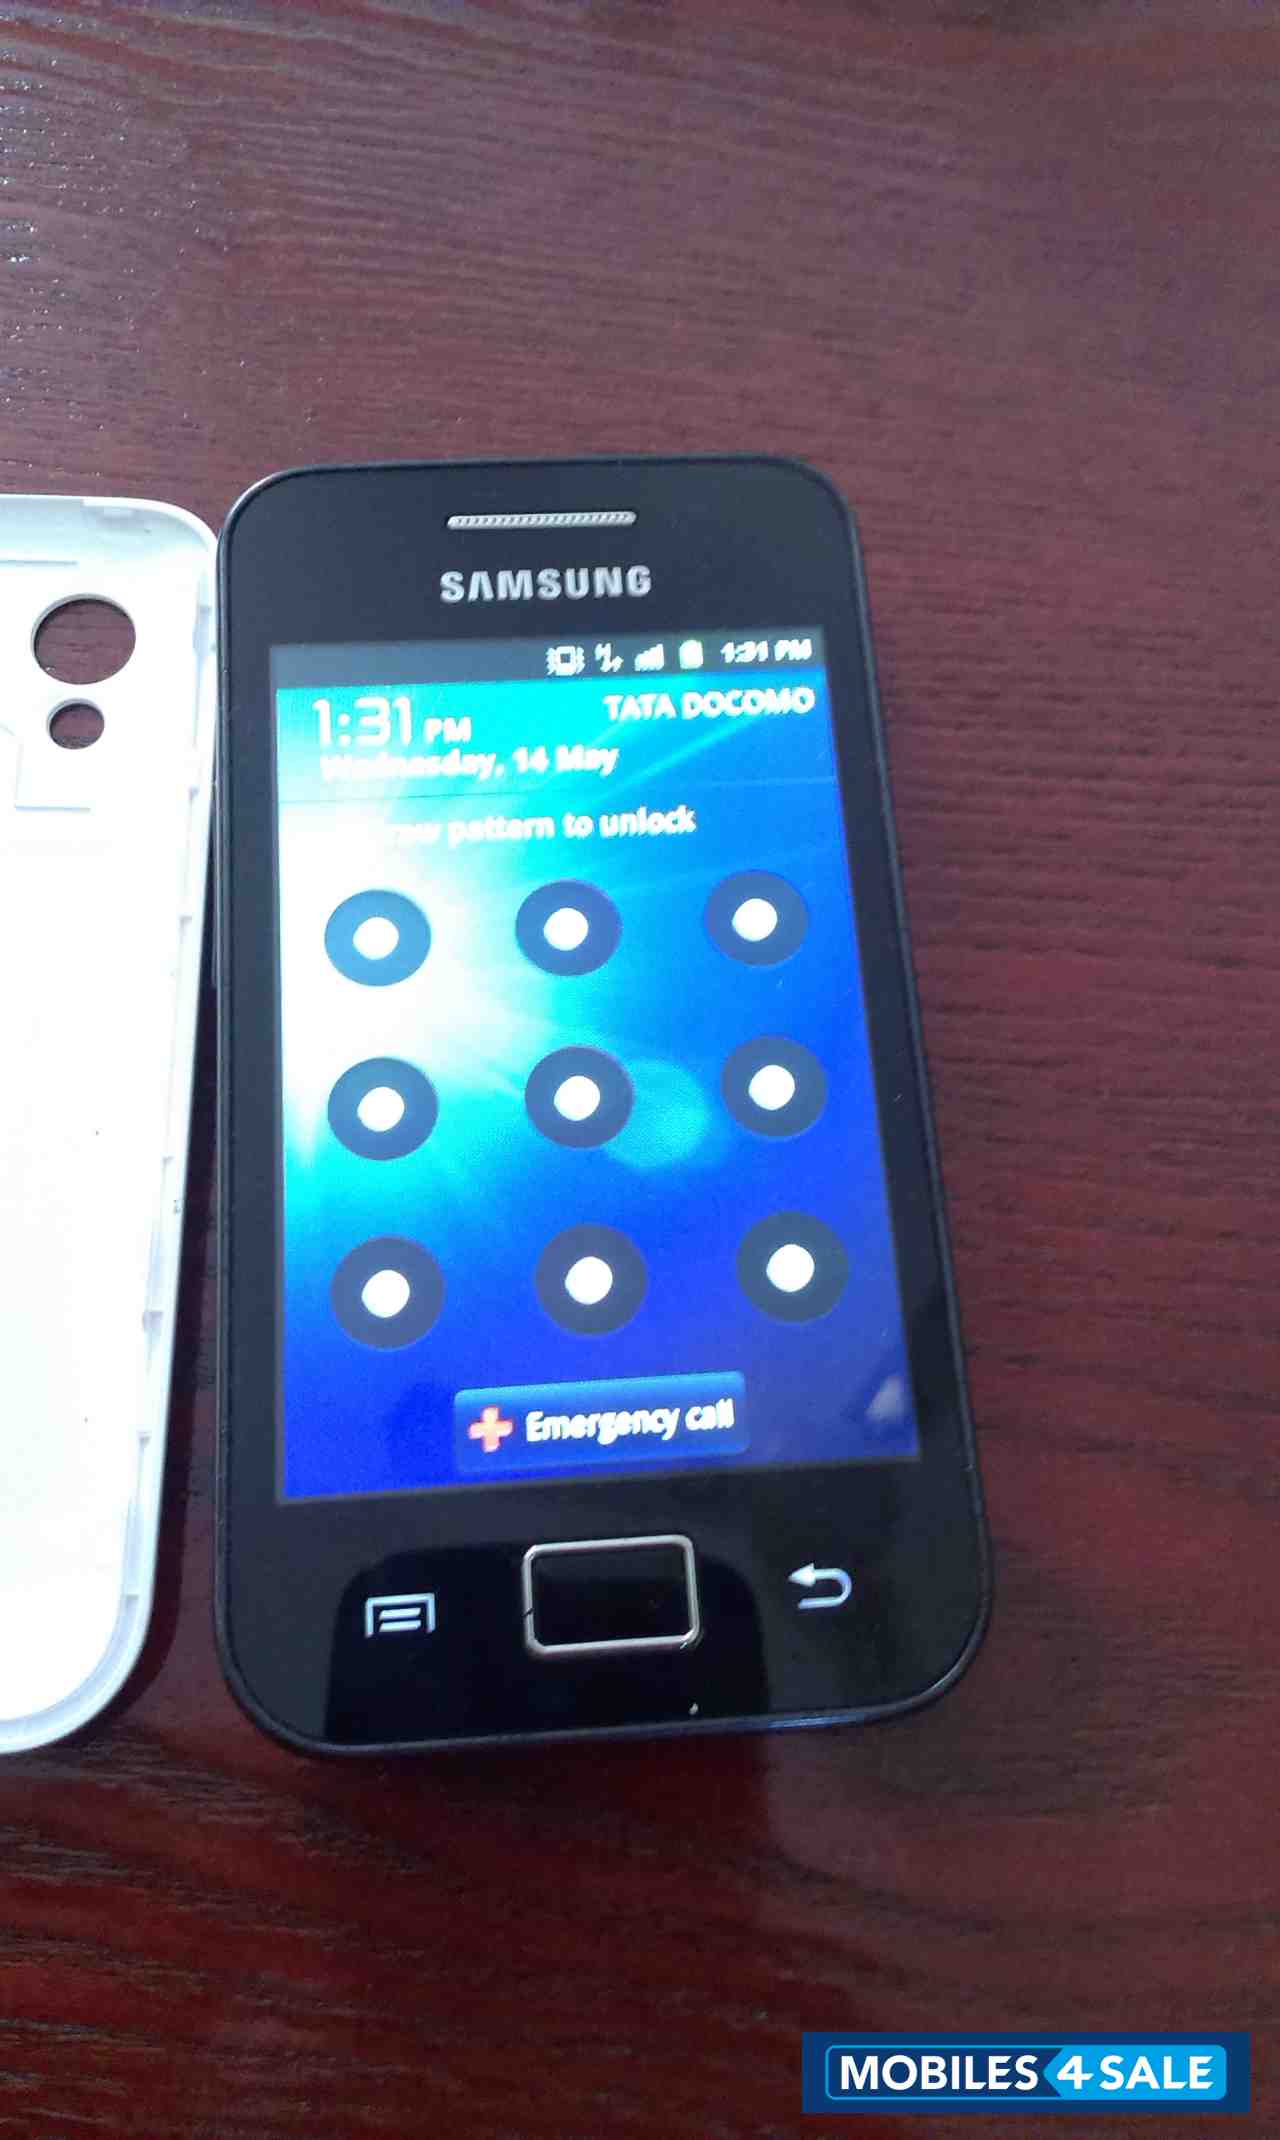 Black Samsung Galaxy Ace GT-S5830i